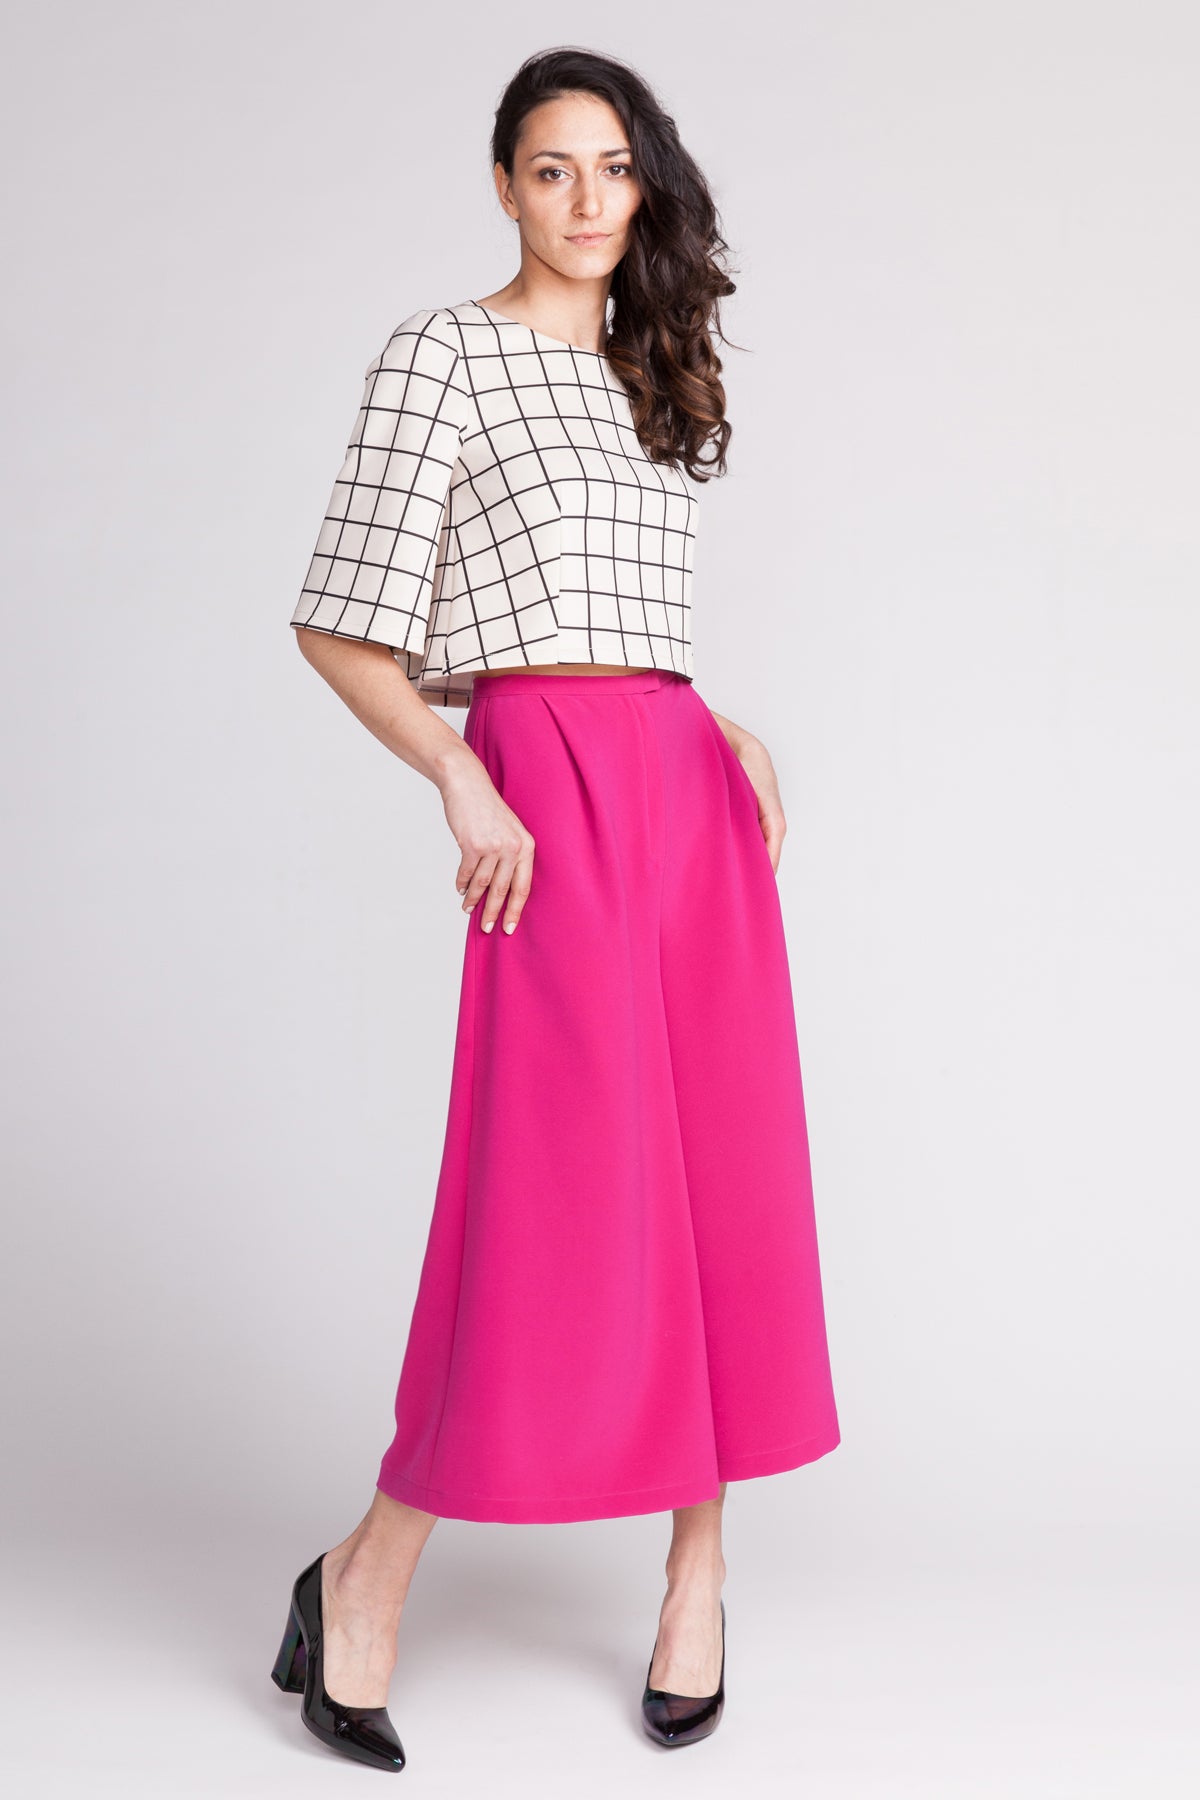 PDF Named Clothing Pattern- Mimosa Culottes - Stitch Love Studio